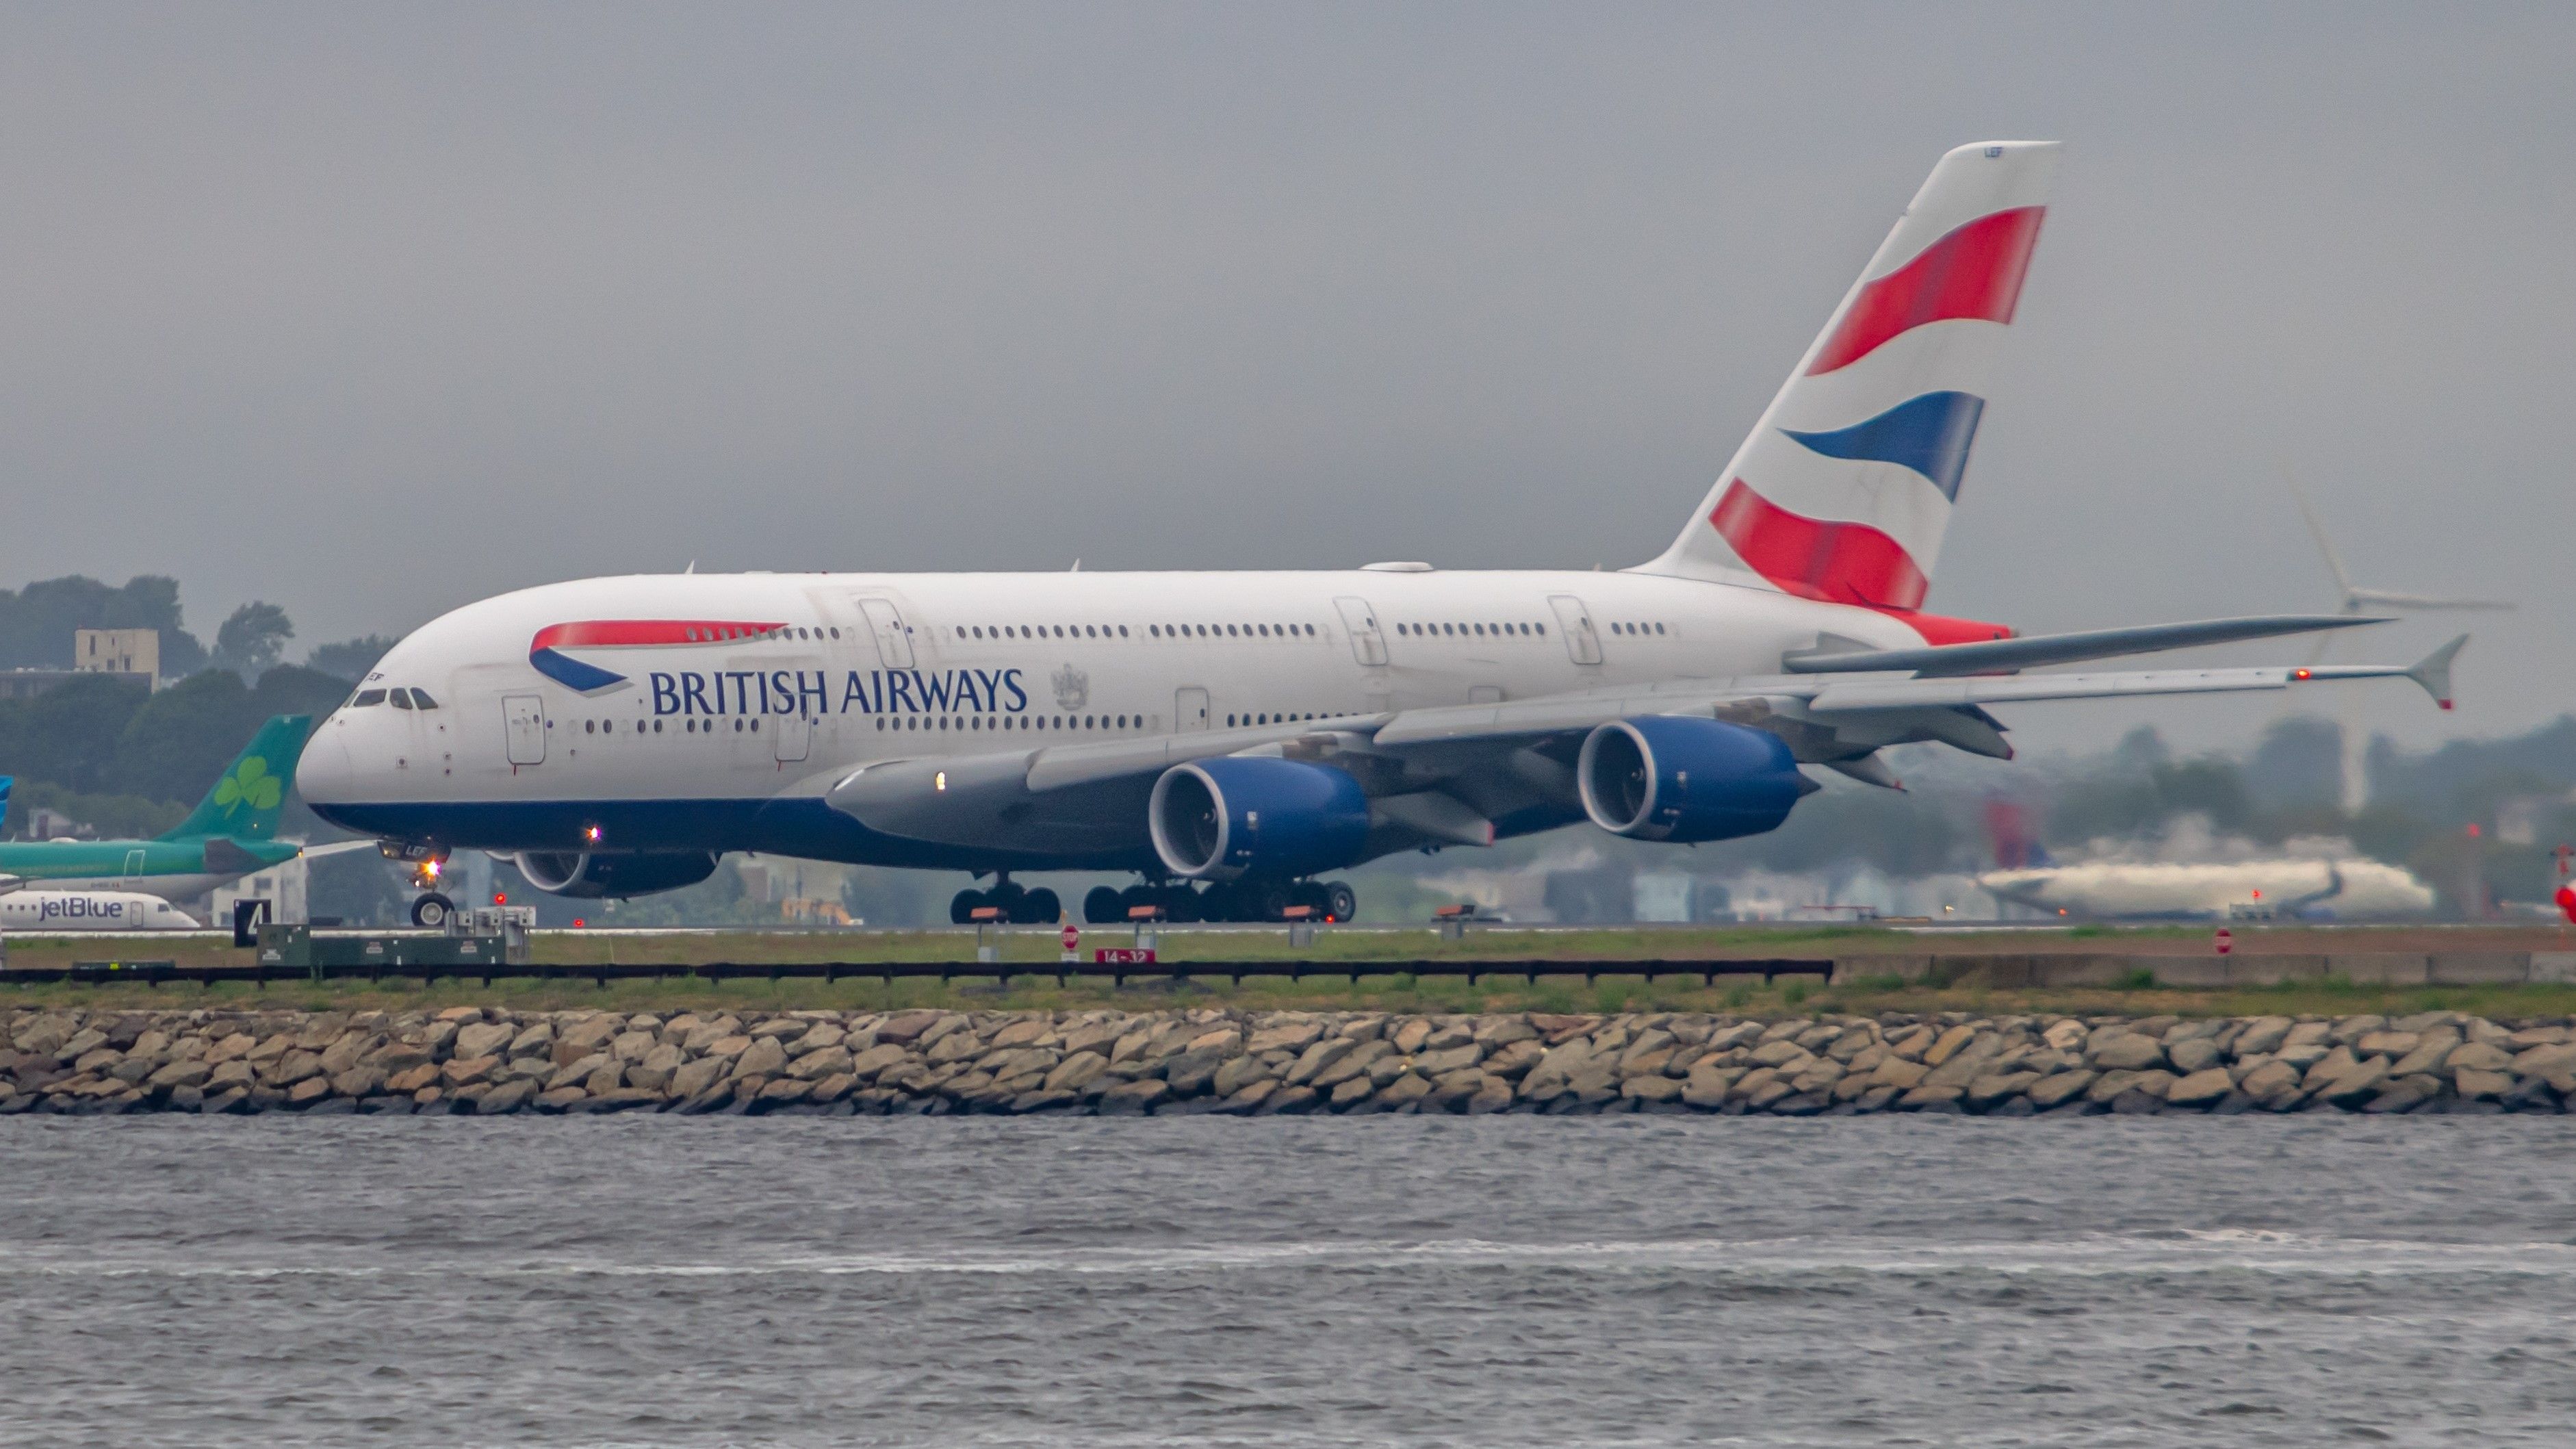 A British Airways Airbus A380 on the apron at Boston Logan International Airport.